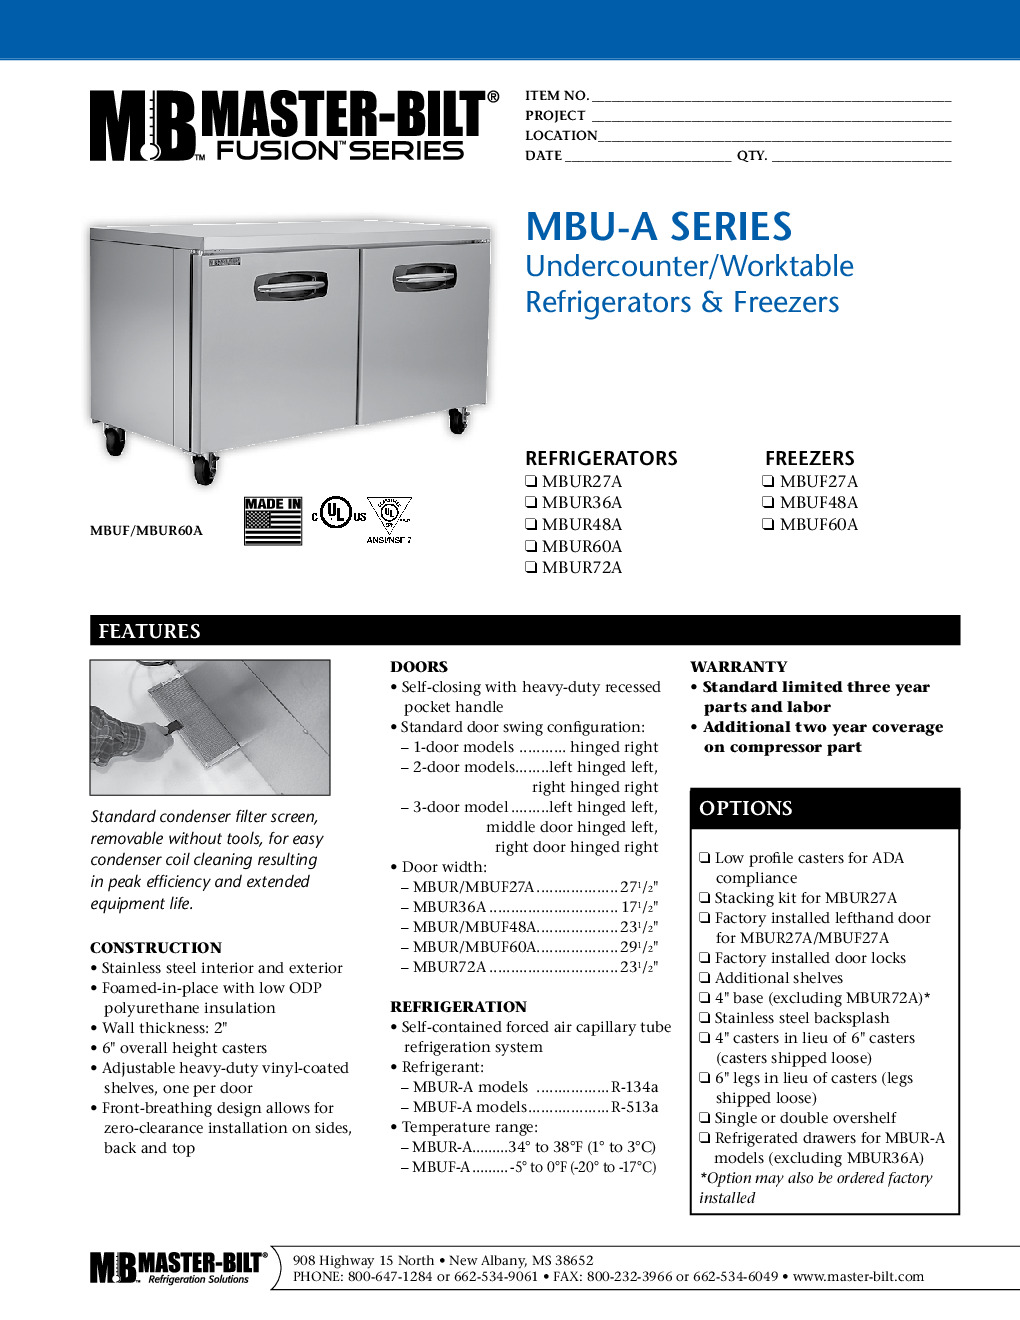 Master-Bilt MBUR72A-006 Reach-In Undercounter Refrigerator